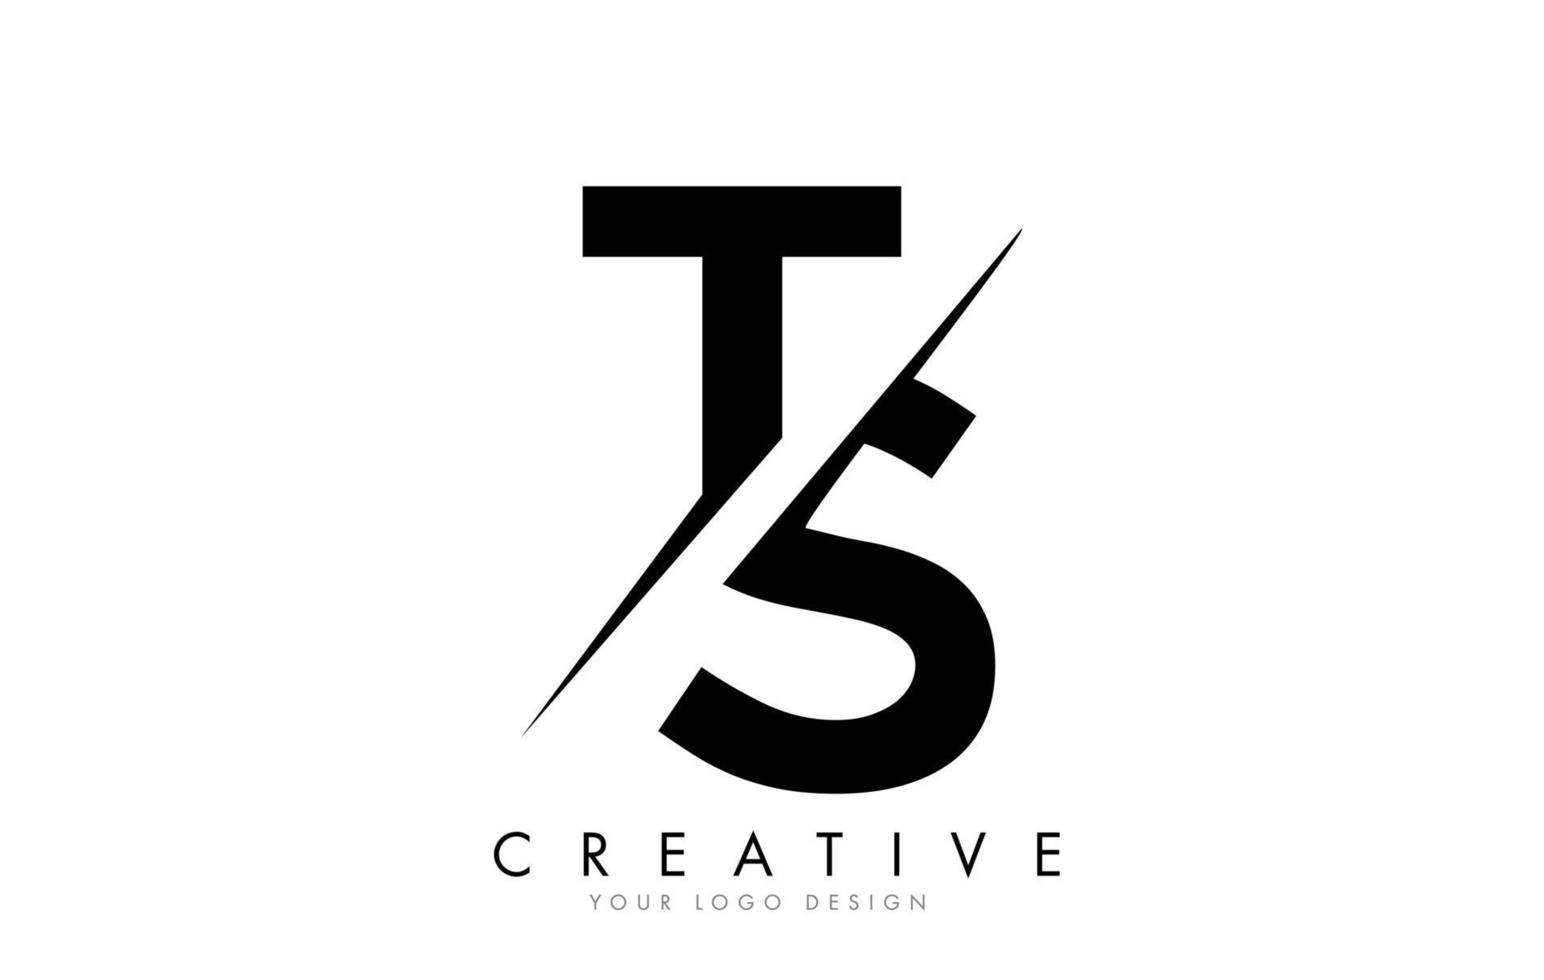 ts ts letter logo design con un corte creativo. vector